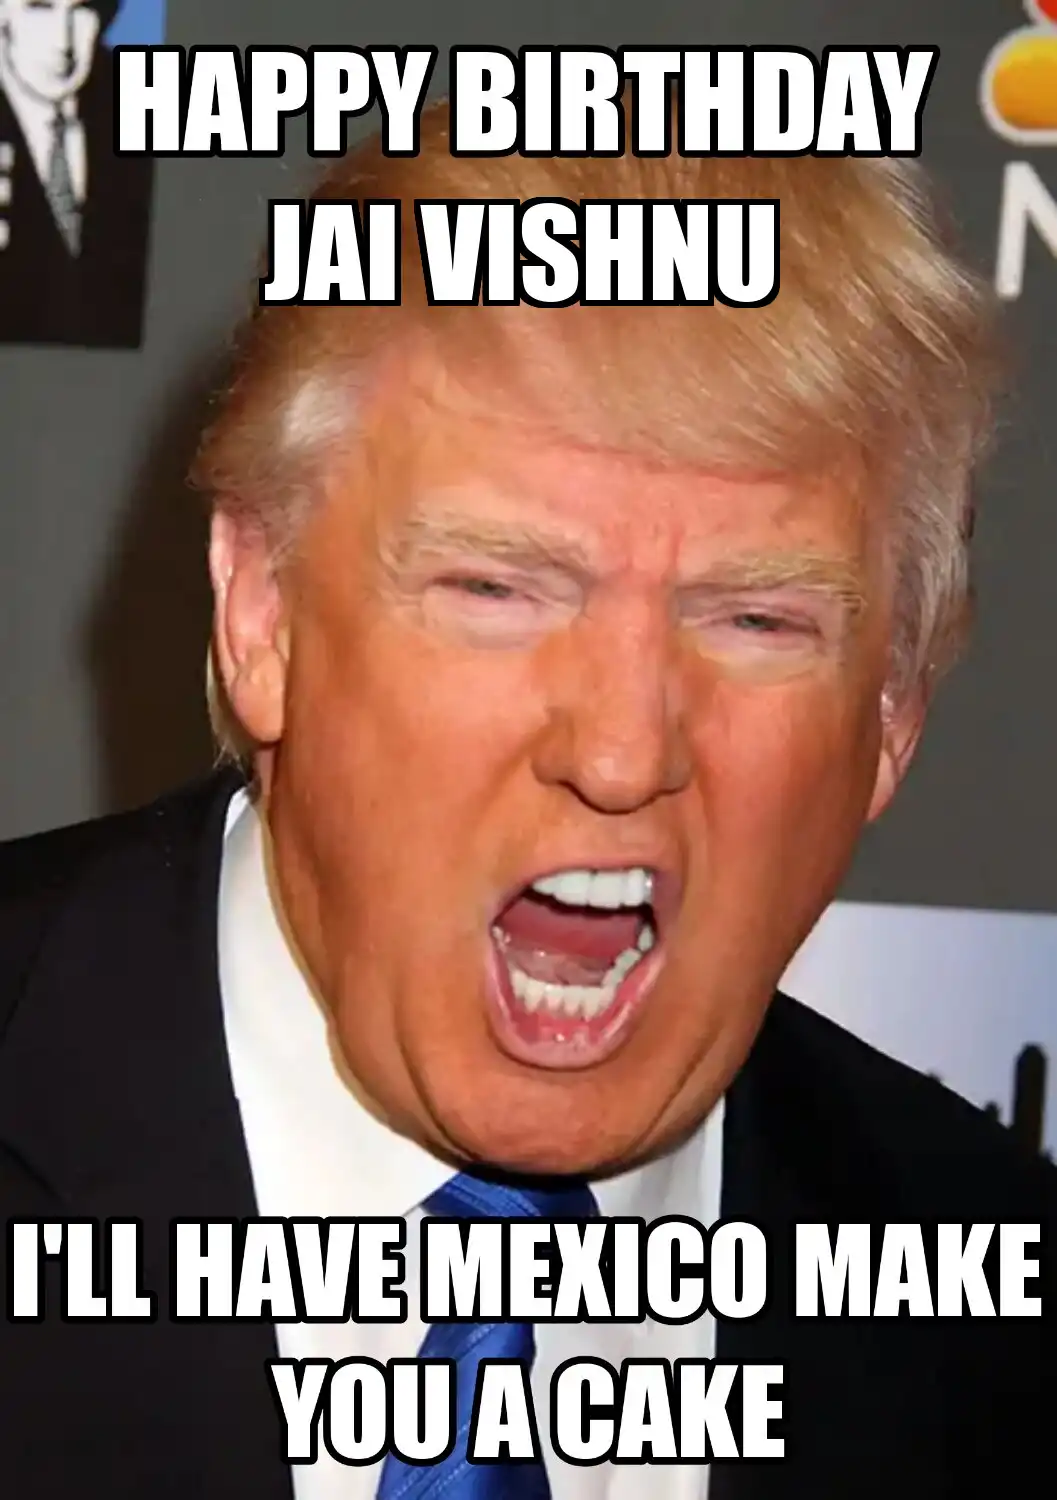 Happy Birthday Jai vishnu Mexico Make You A Cake Meme